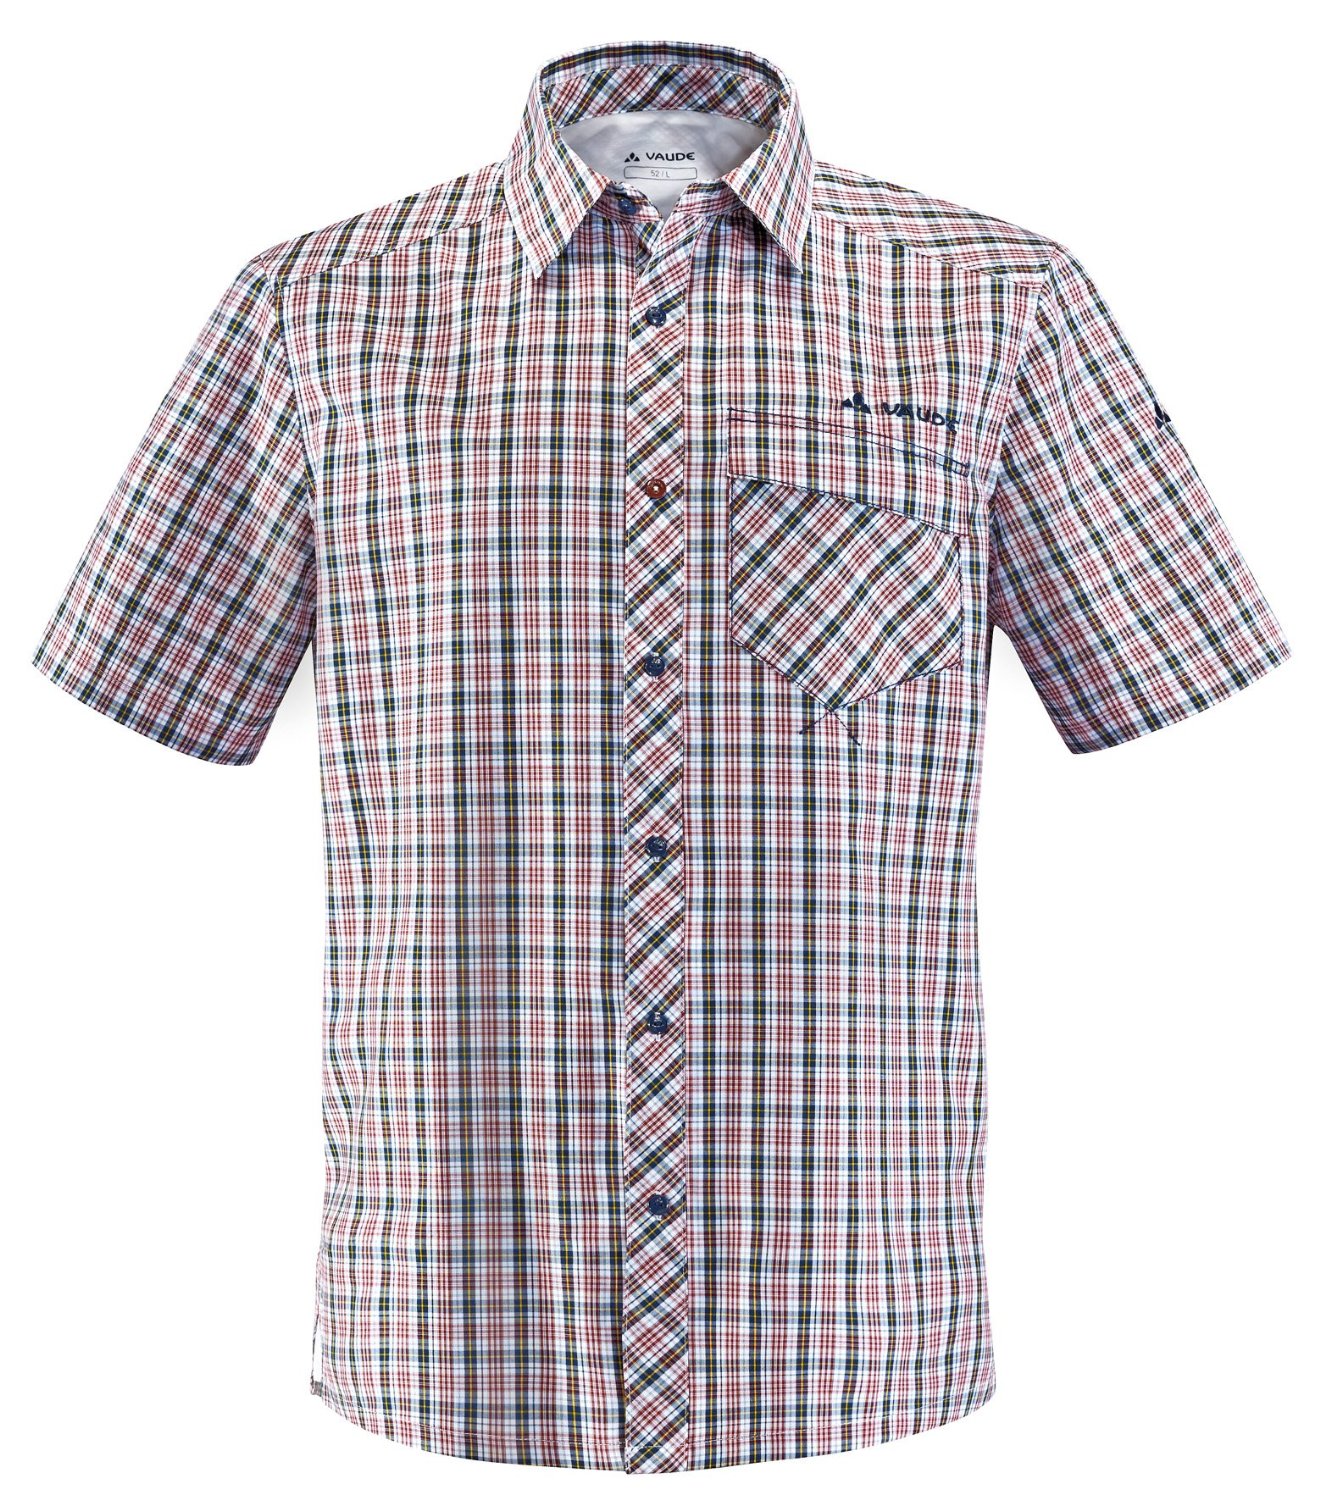 Vaude - Мужская рубашка с коротким рукавом Me Culswick Shirt